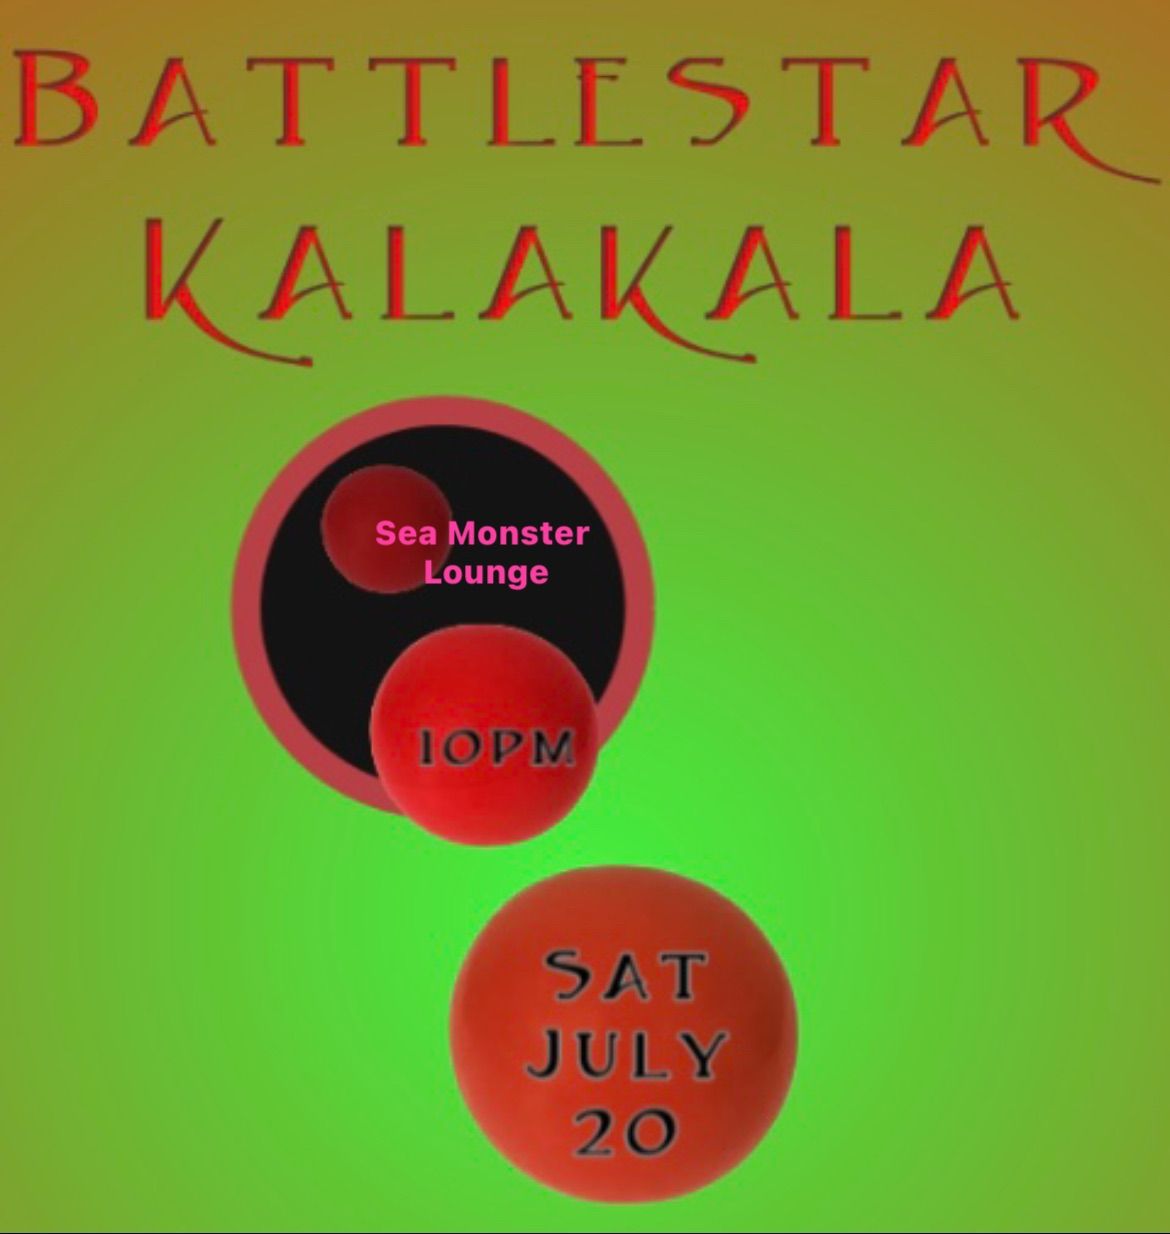 Battlestar Kalakala on July 20th!